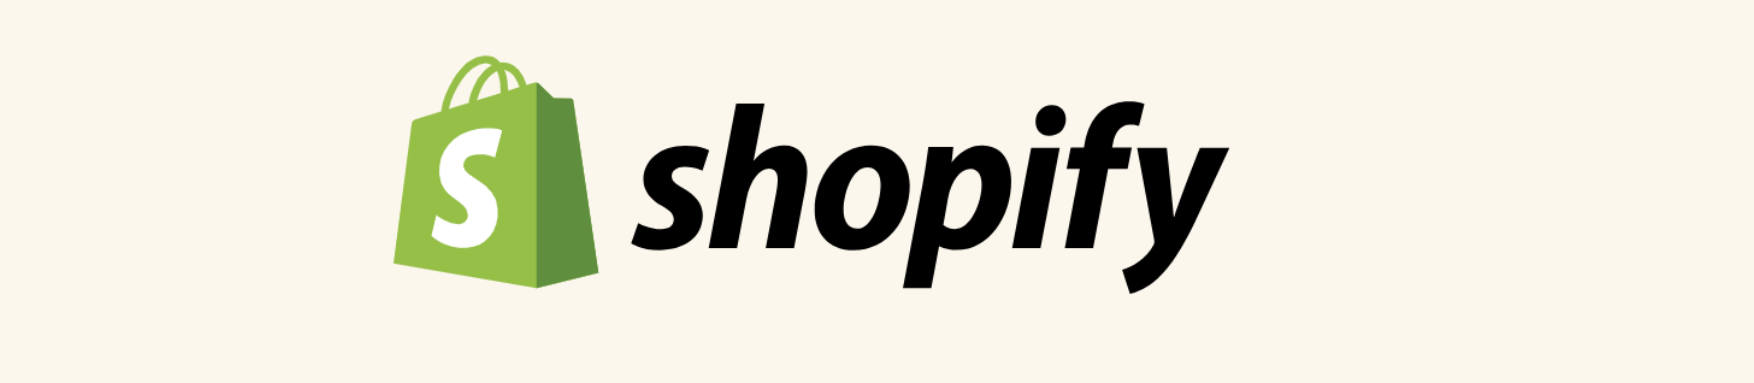 Shopify логотип